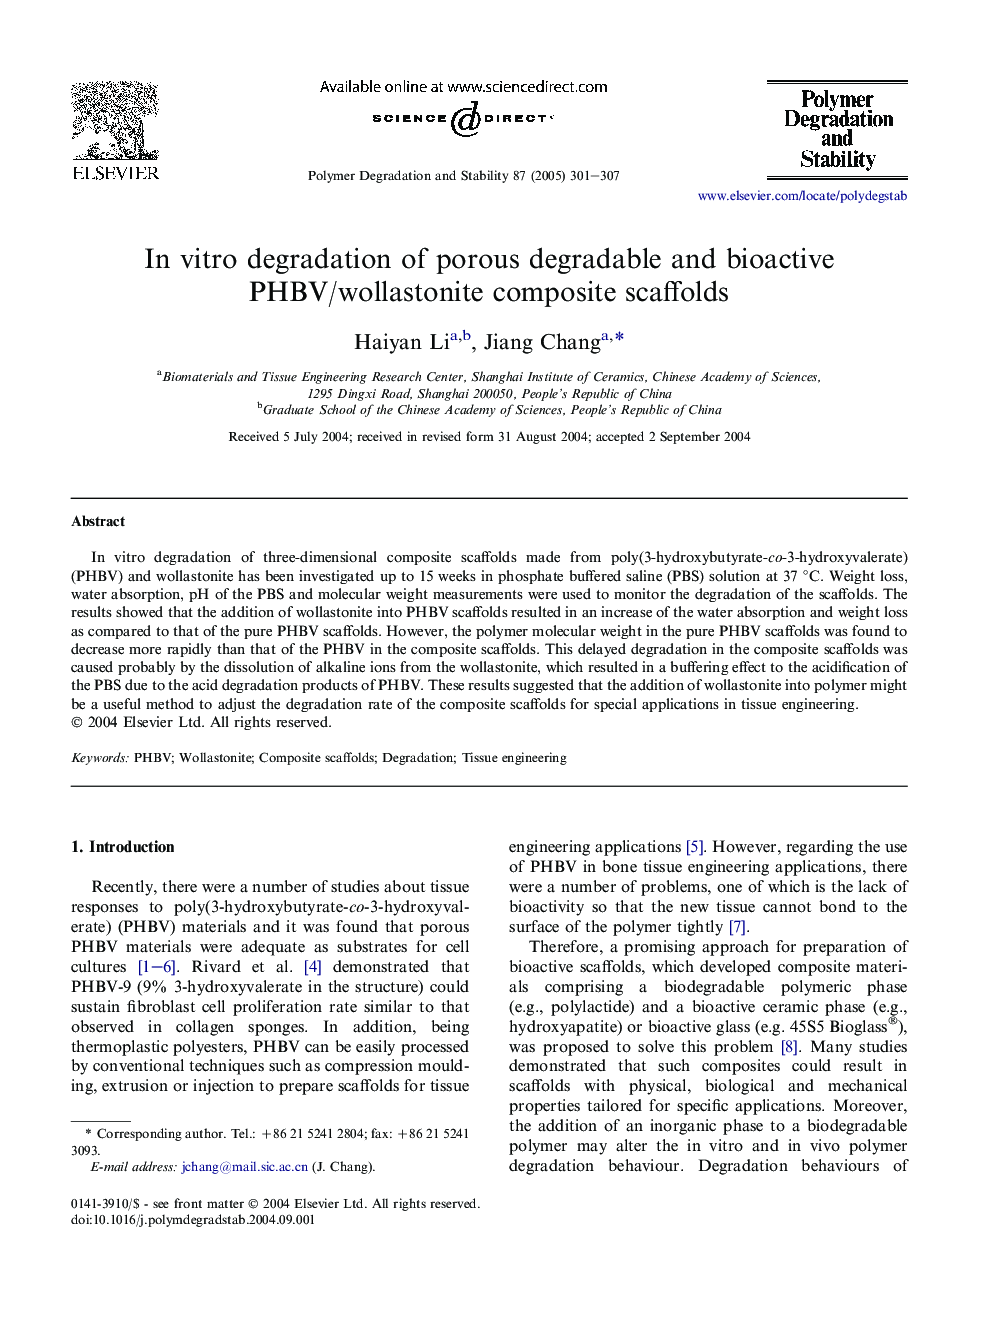 In vitro degradation of porous degradable and bioactive PHBV/wollastonite composite scaffolds